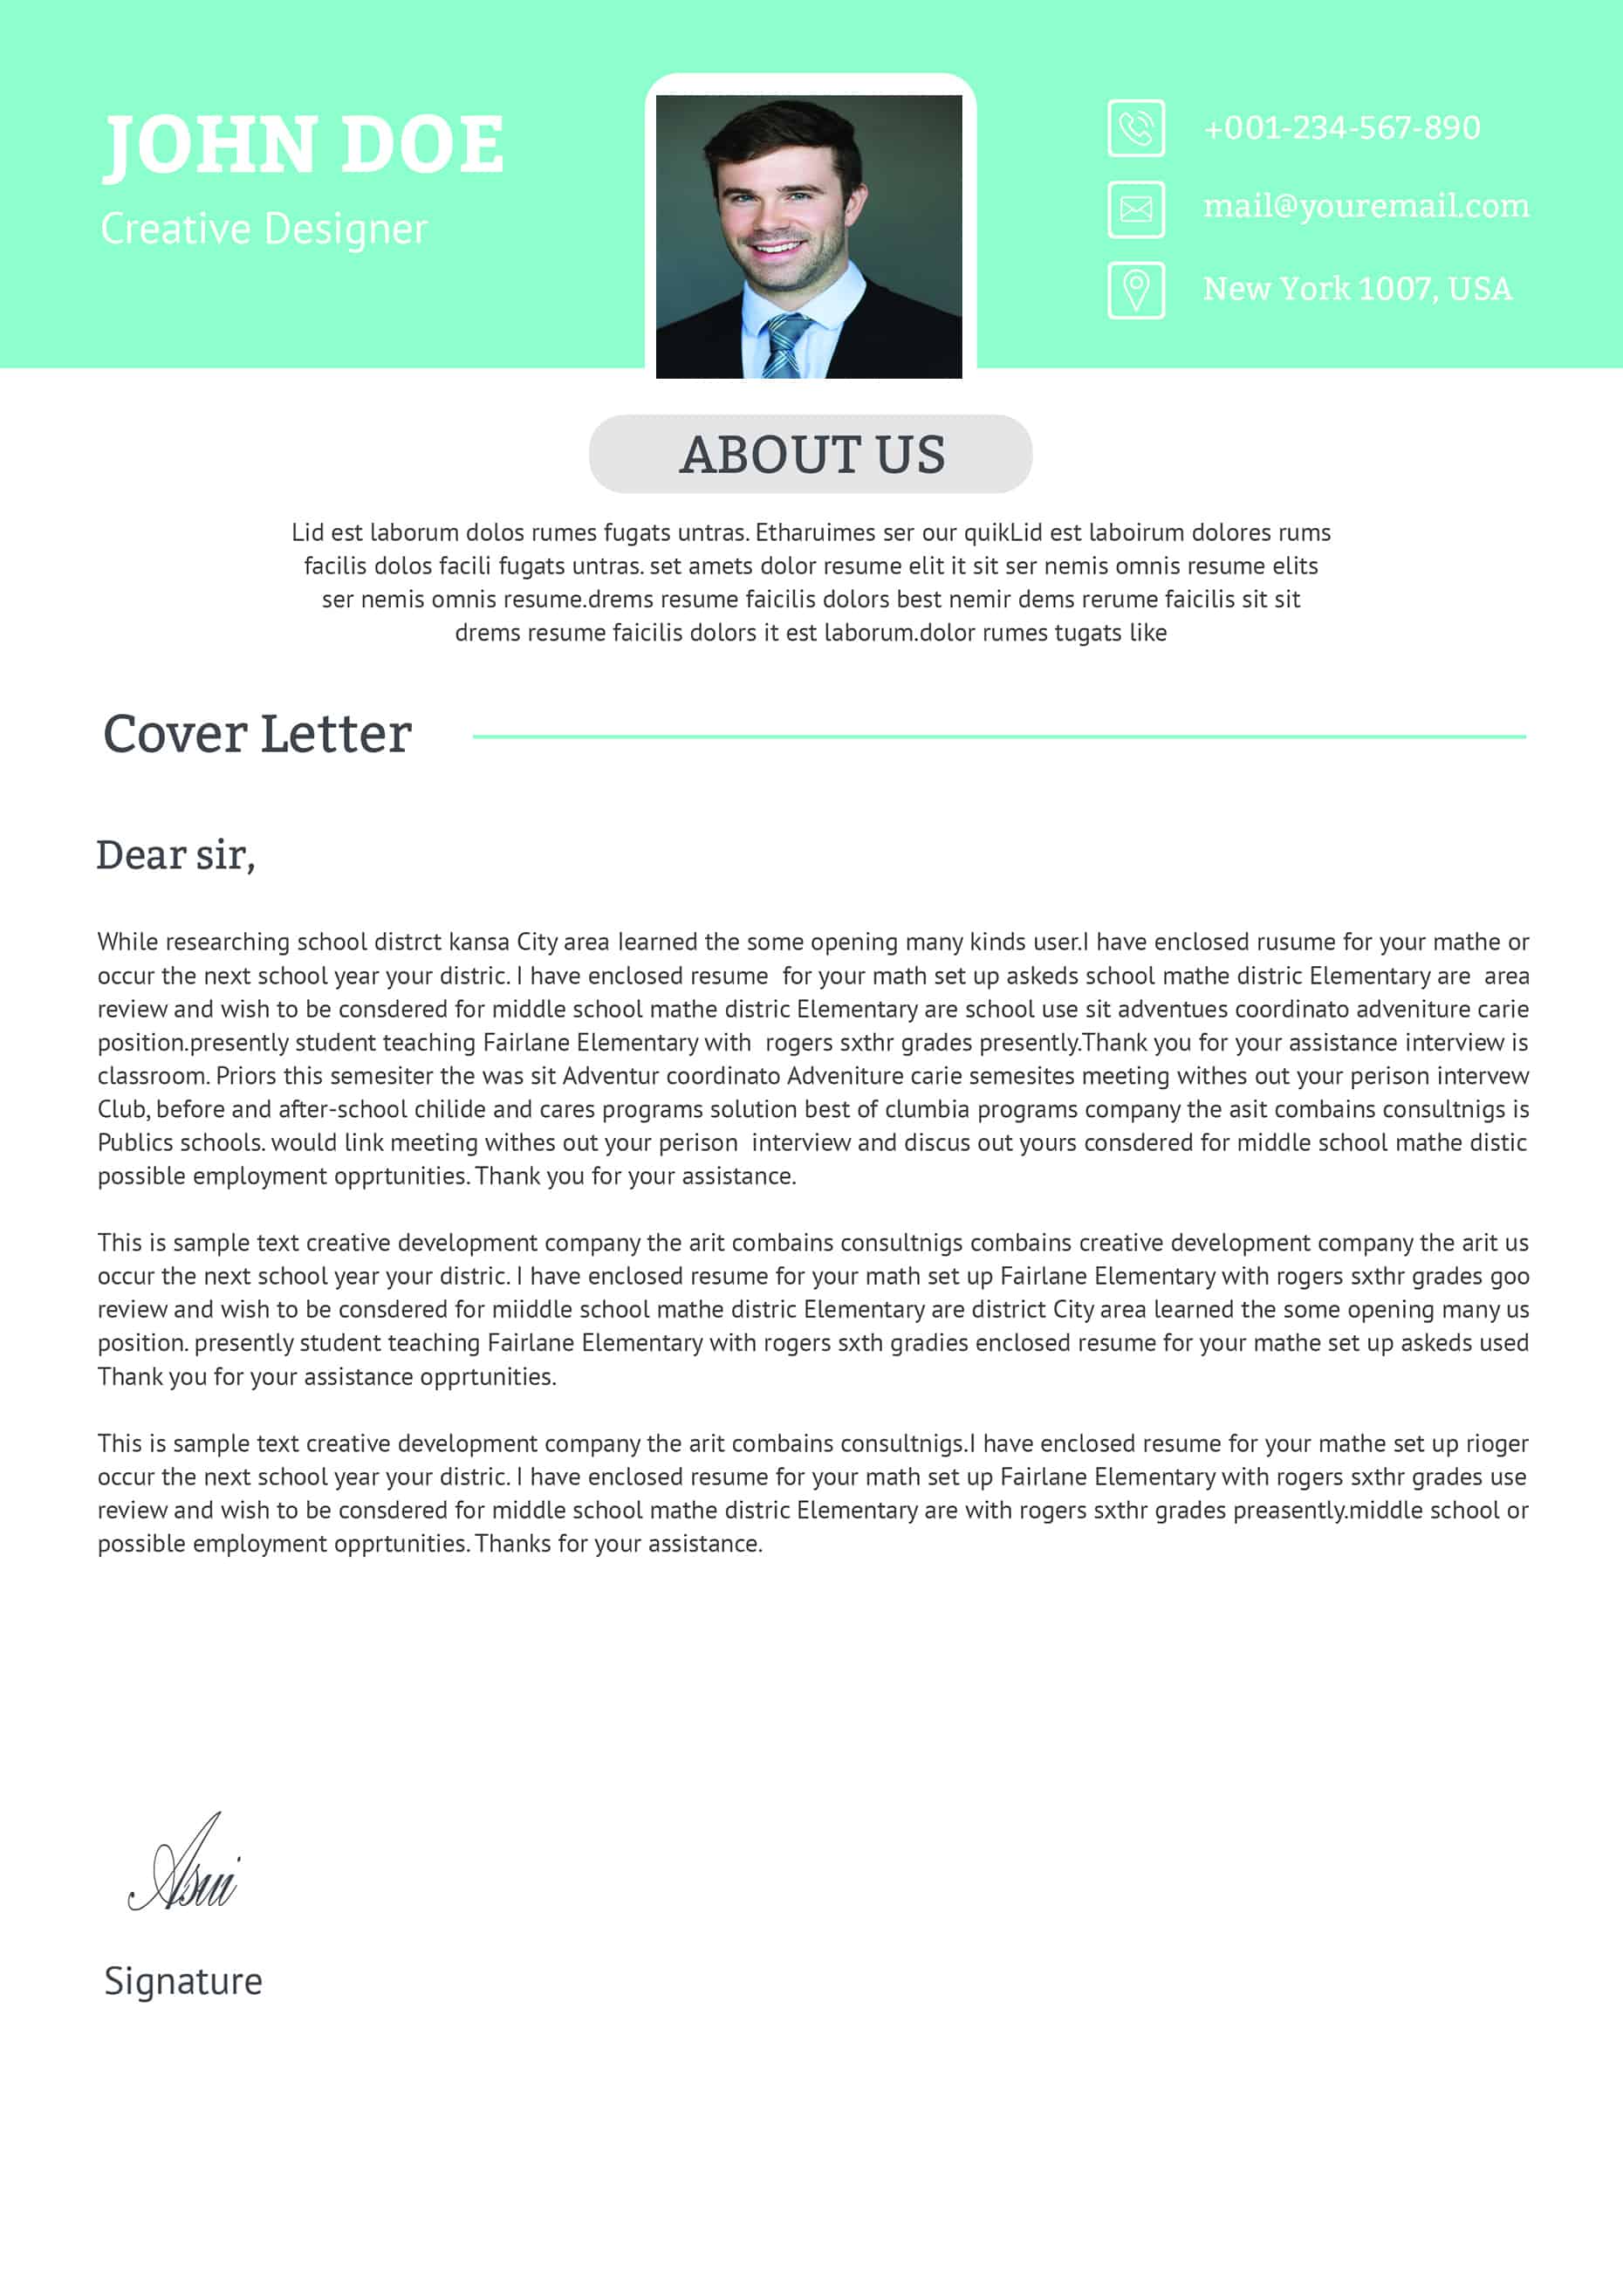 Senior Manager Cover Letter - Download Cover Letter ...